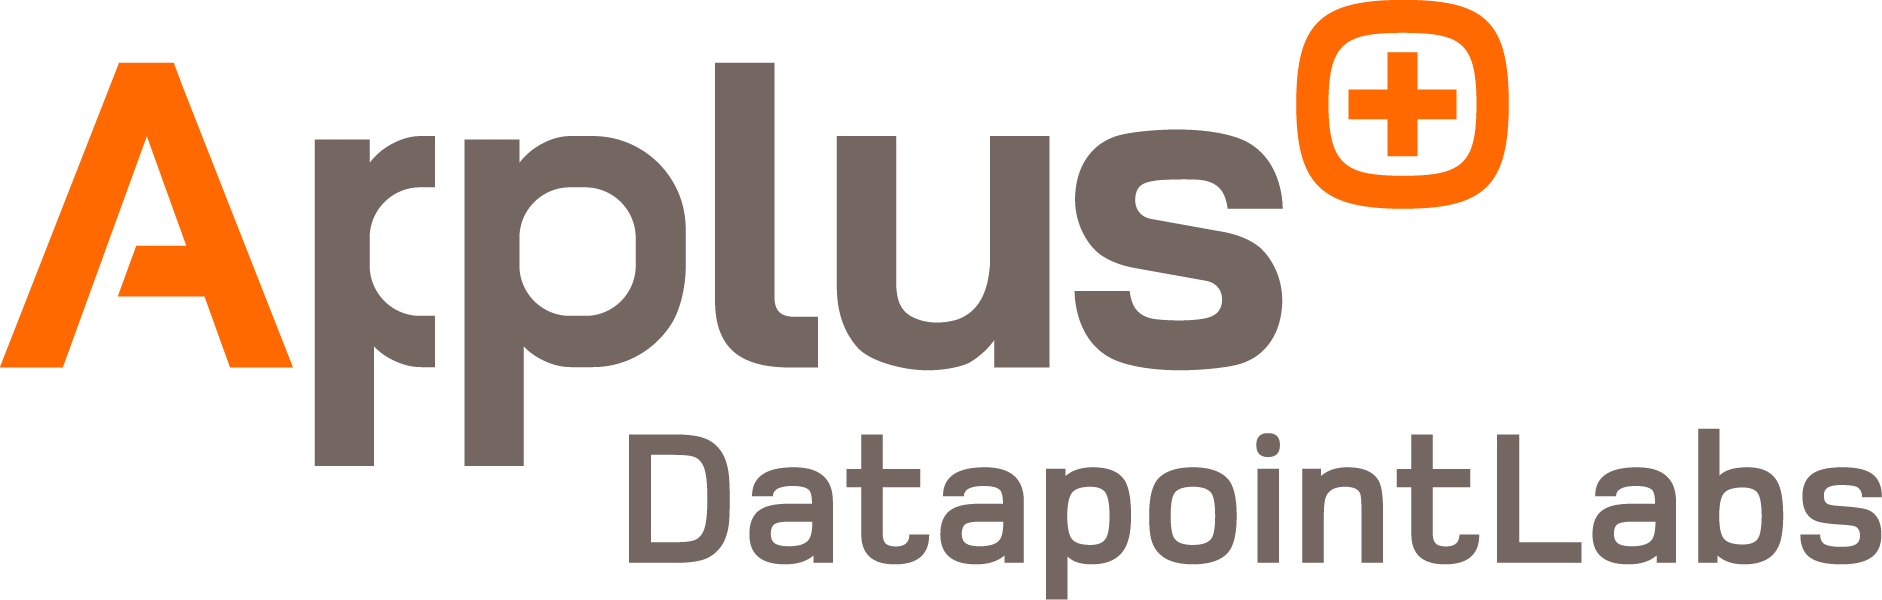 DatapointLabs logo